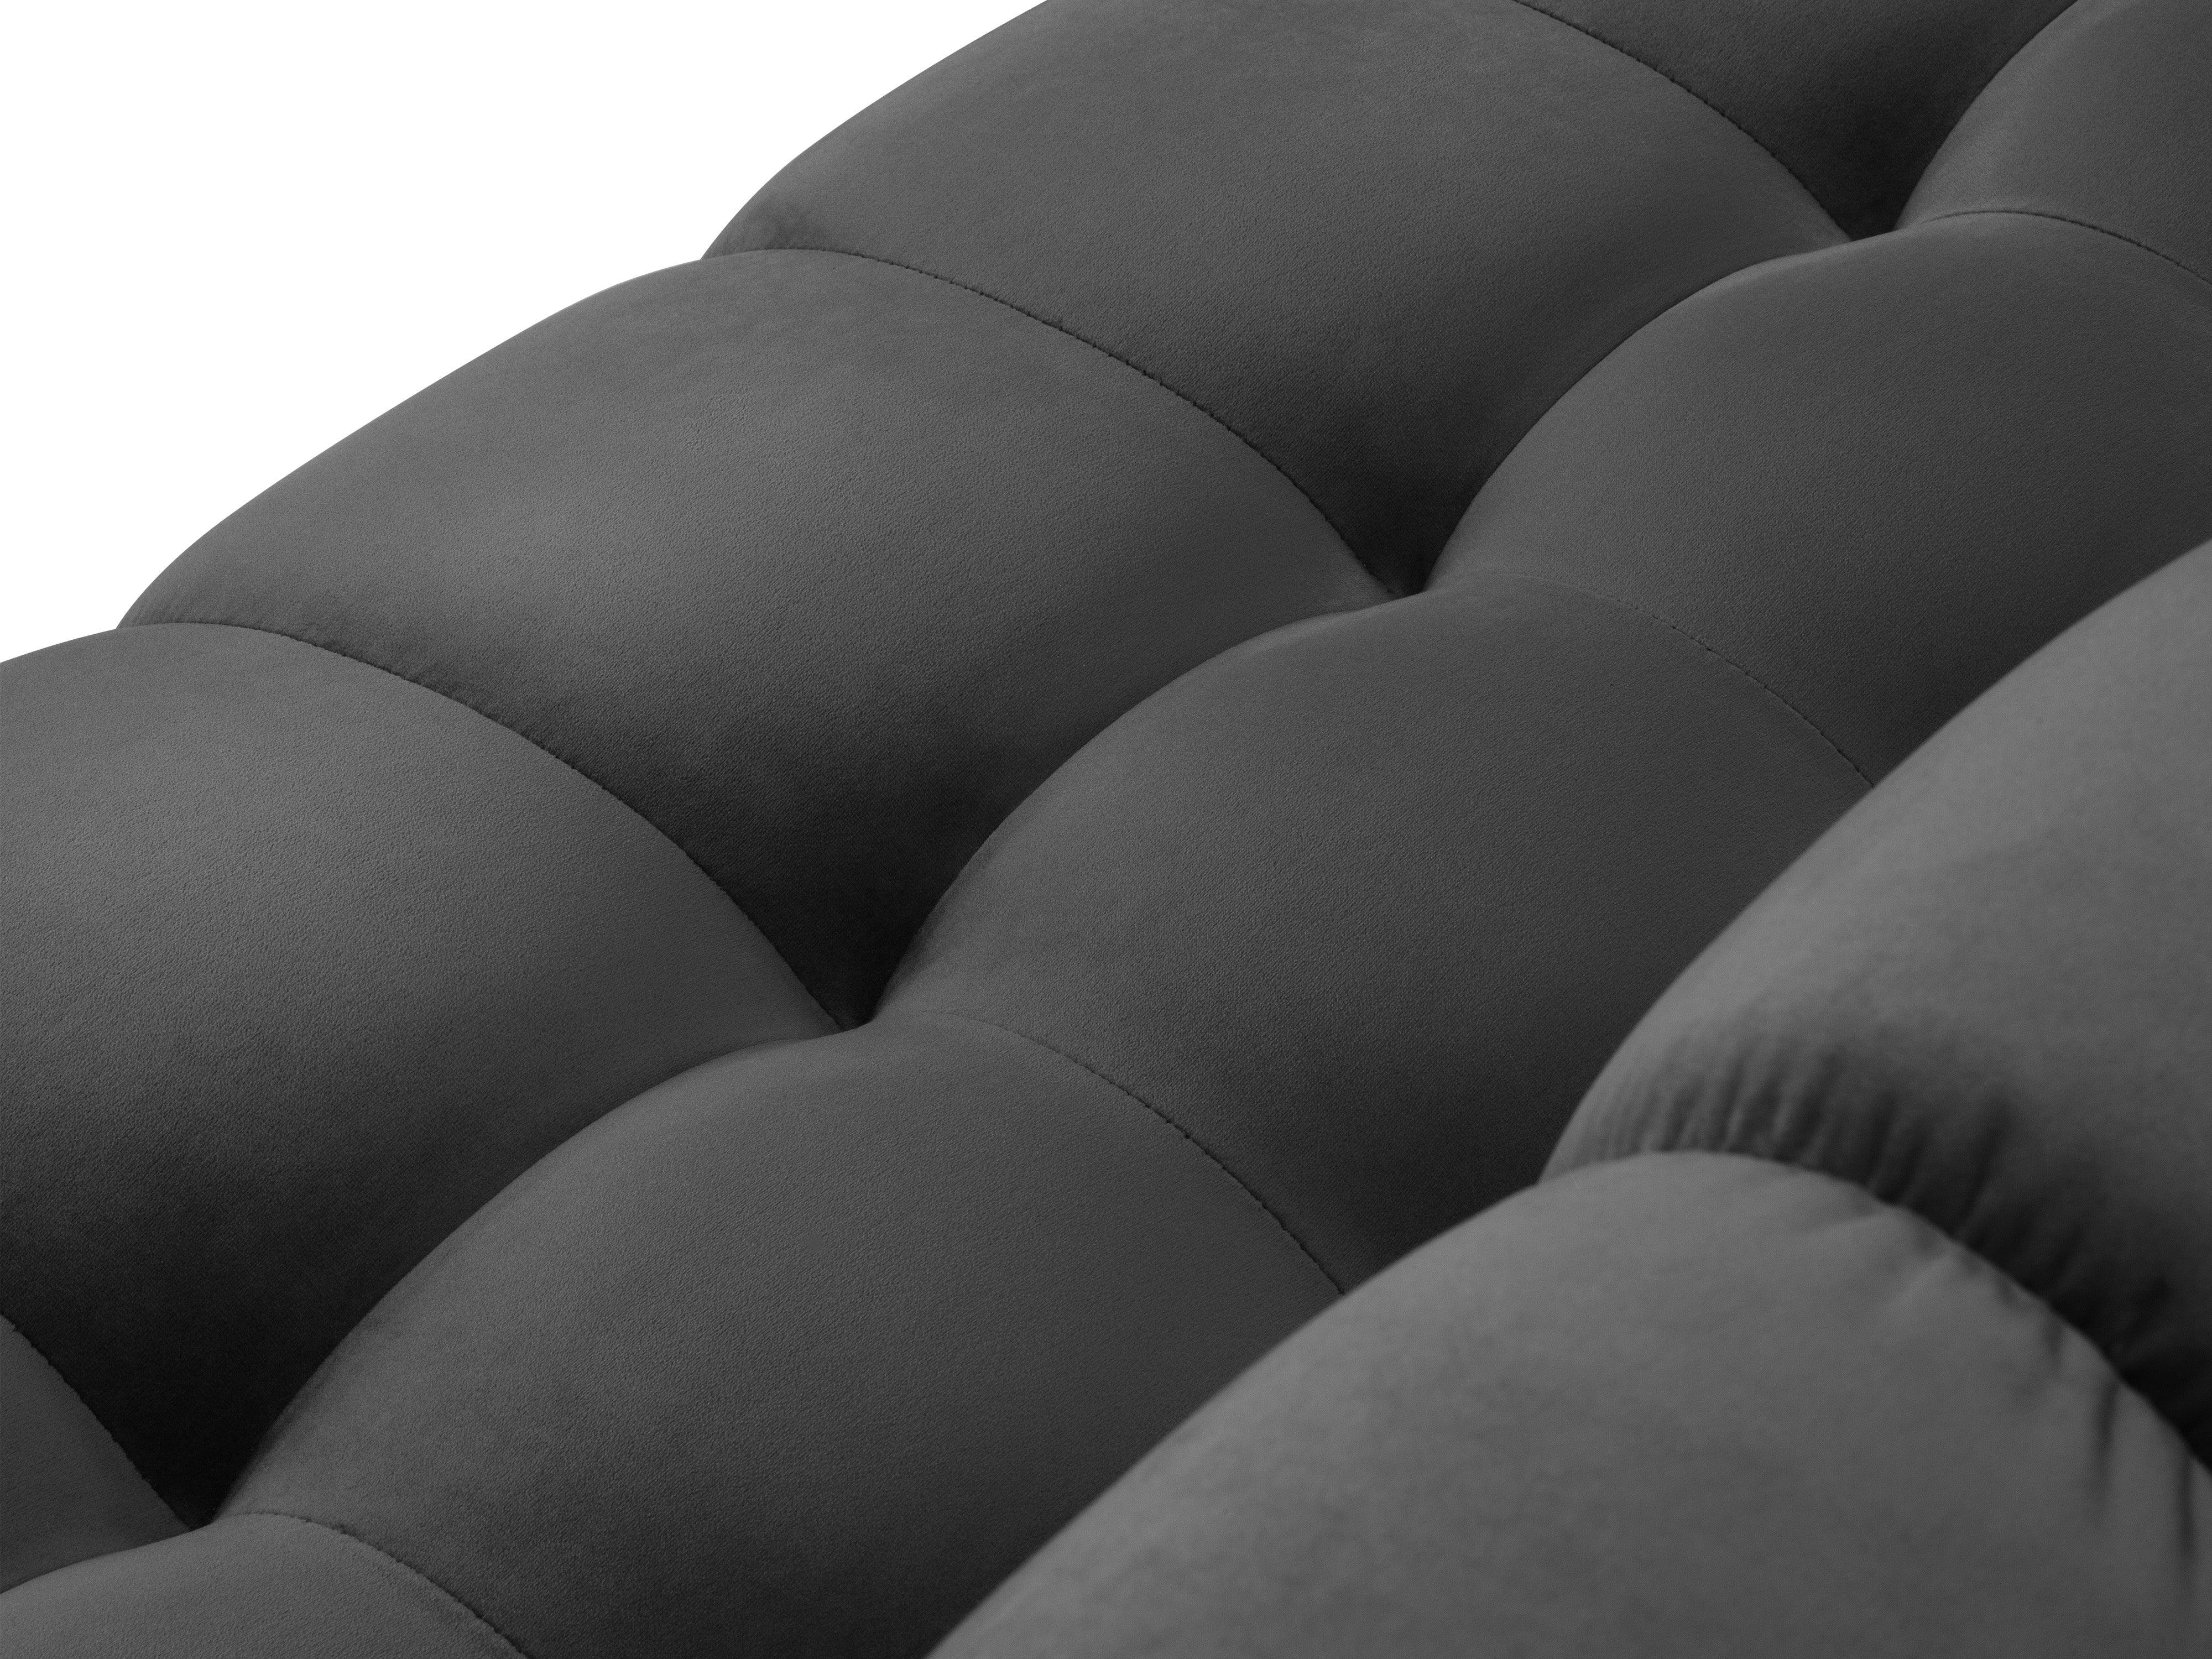 Velvet Right Corner Sofa, "Justin", 4 Seats, 236x160x72
Made in Europe, Micadoni, Eye on Design